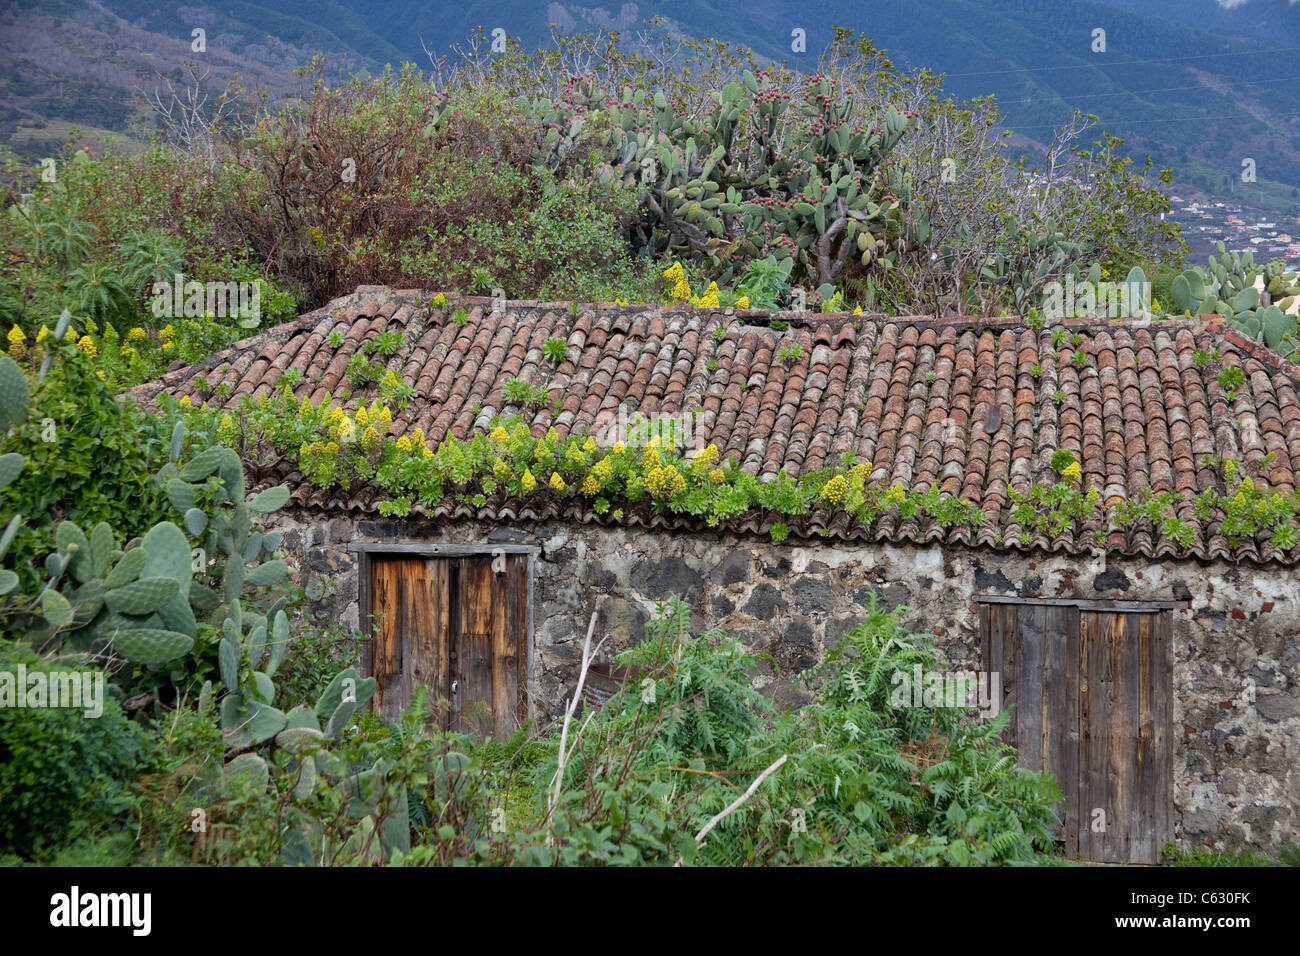 Roof of canarian house overgrown with Tree aenium (Aeonium arboreum), Mazo, La Palma, Canary islands, Spain, Europe Stock Photo